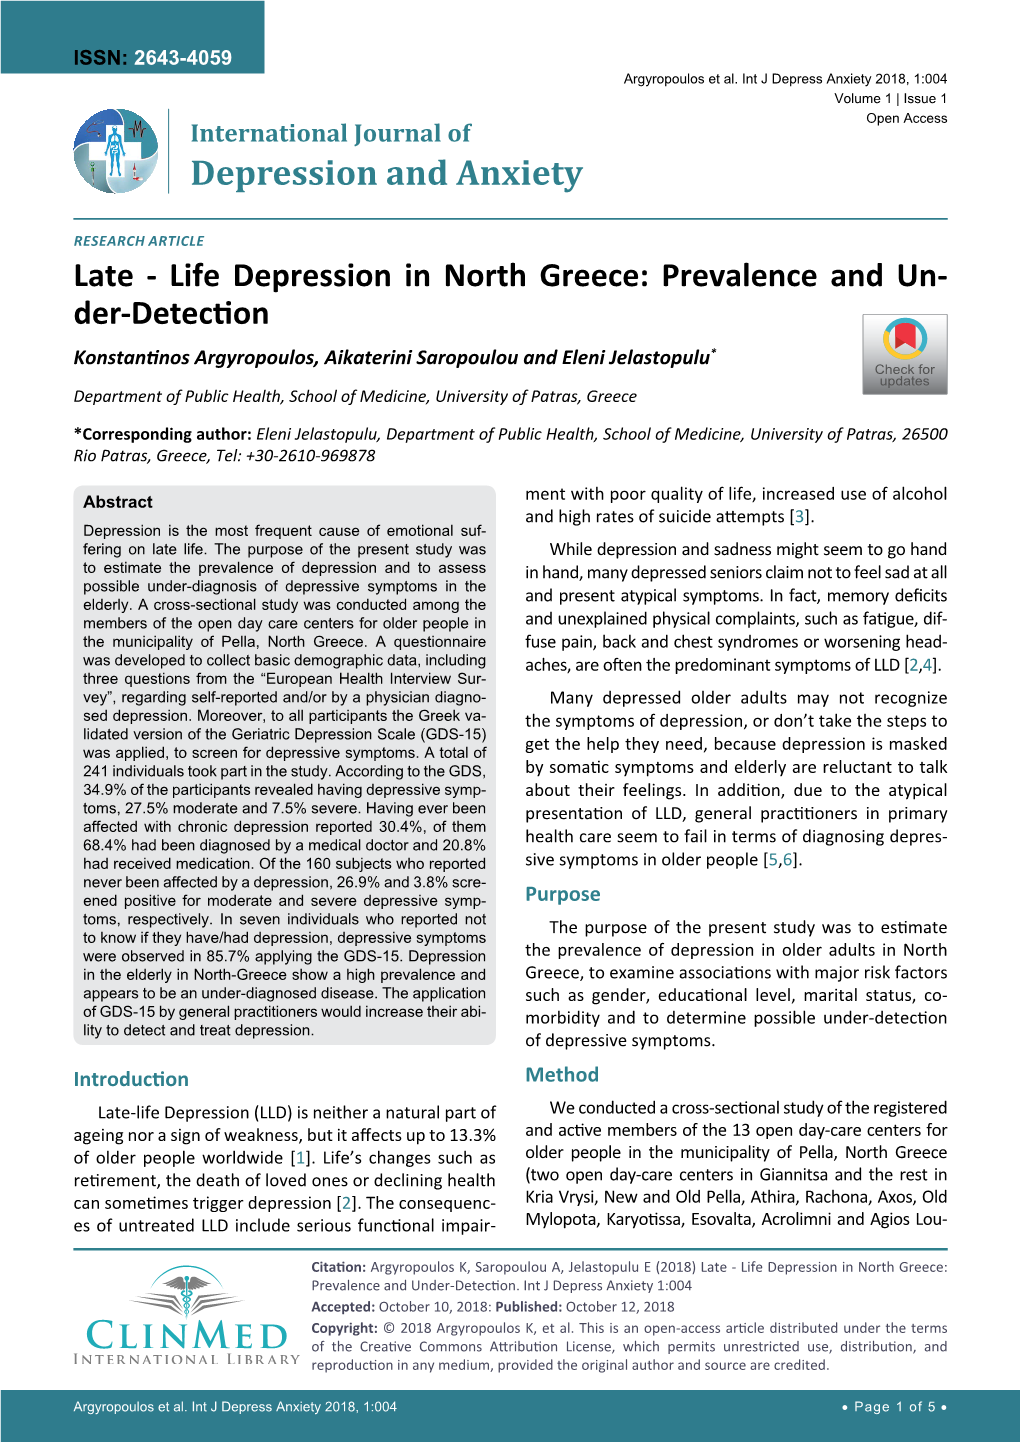 Life Depression in North Greece